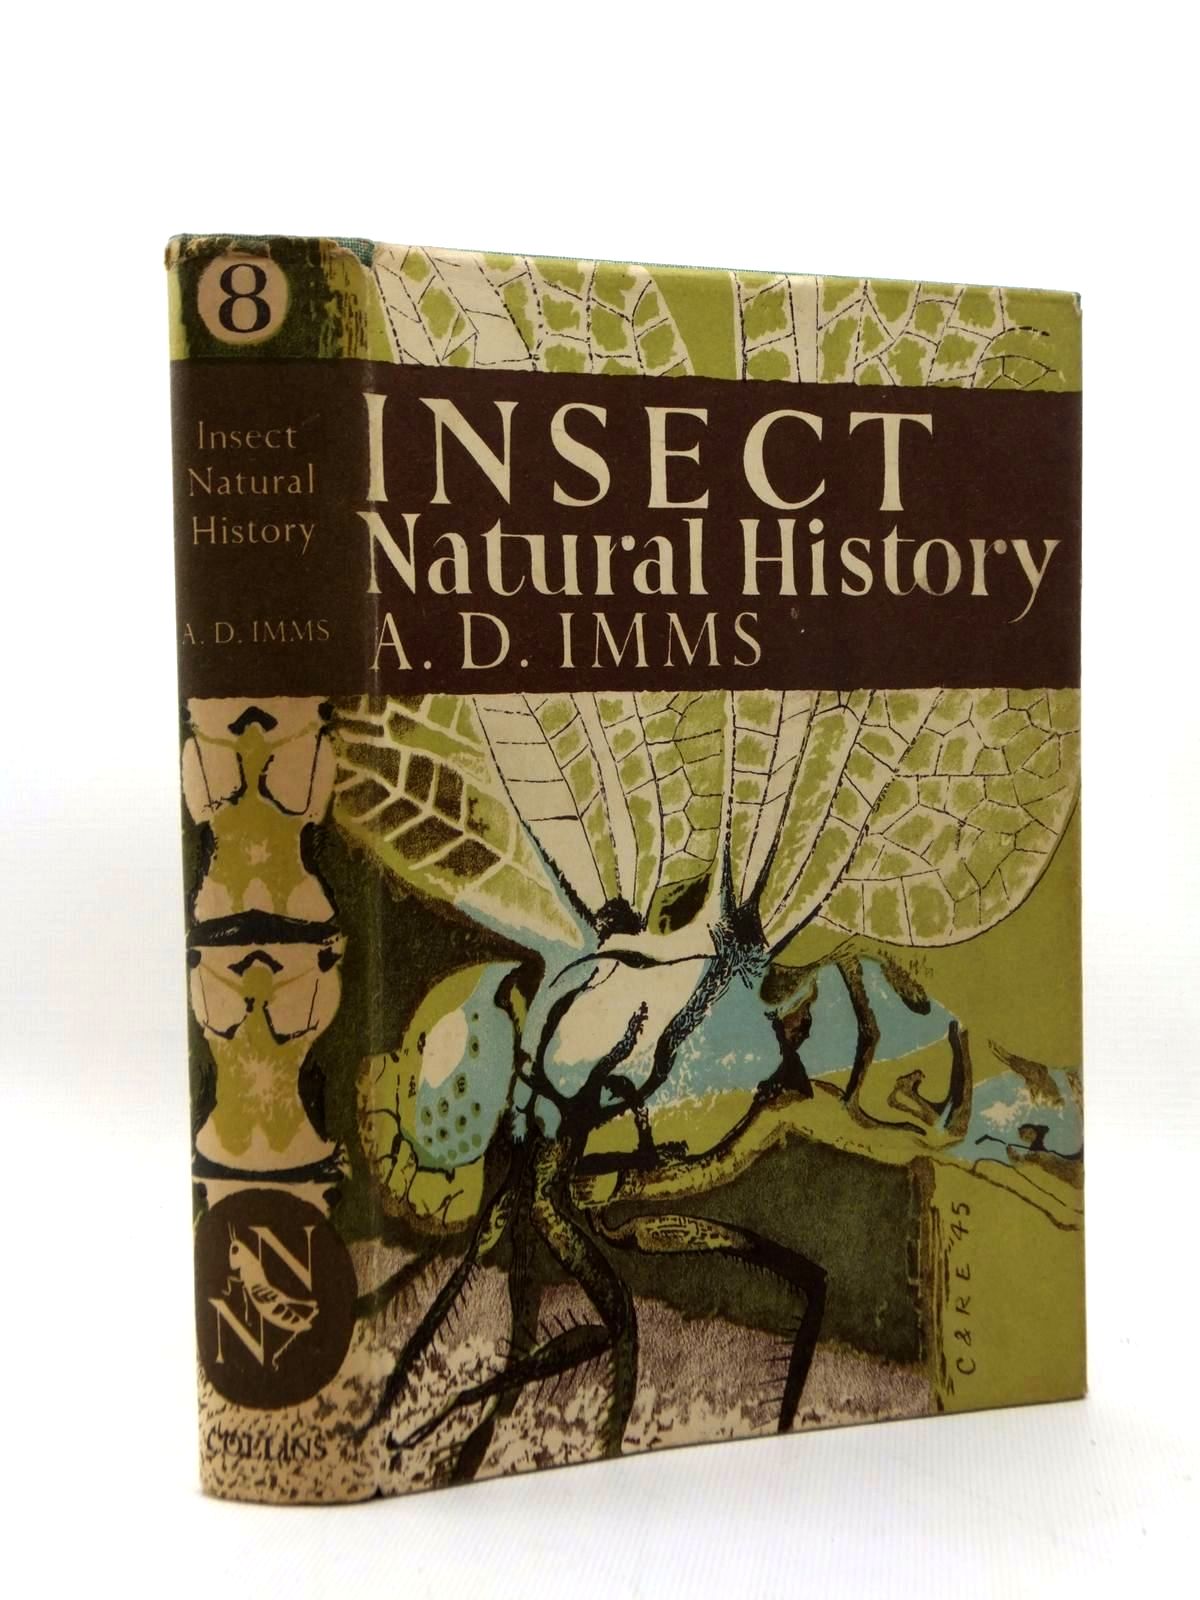 Insect Natural History (nn 8)